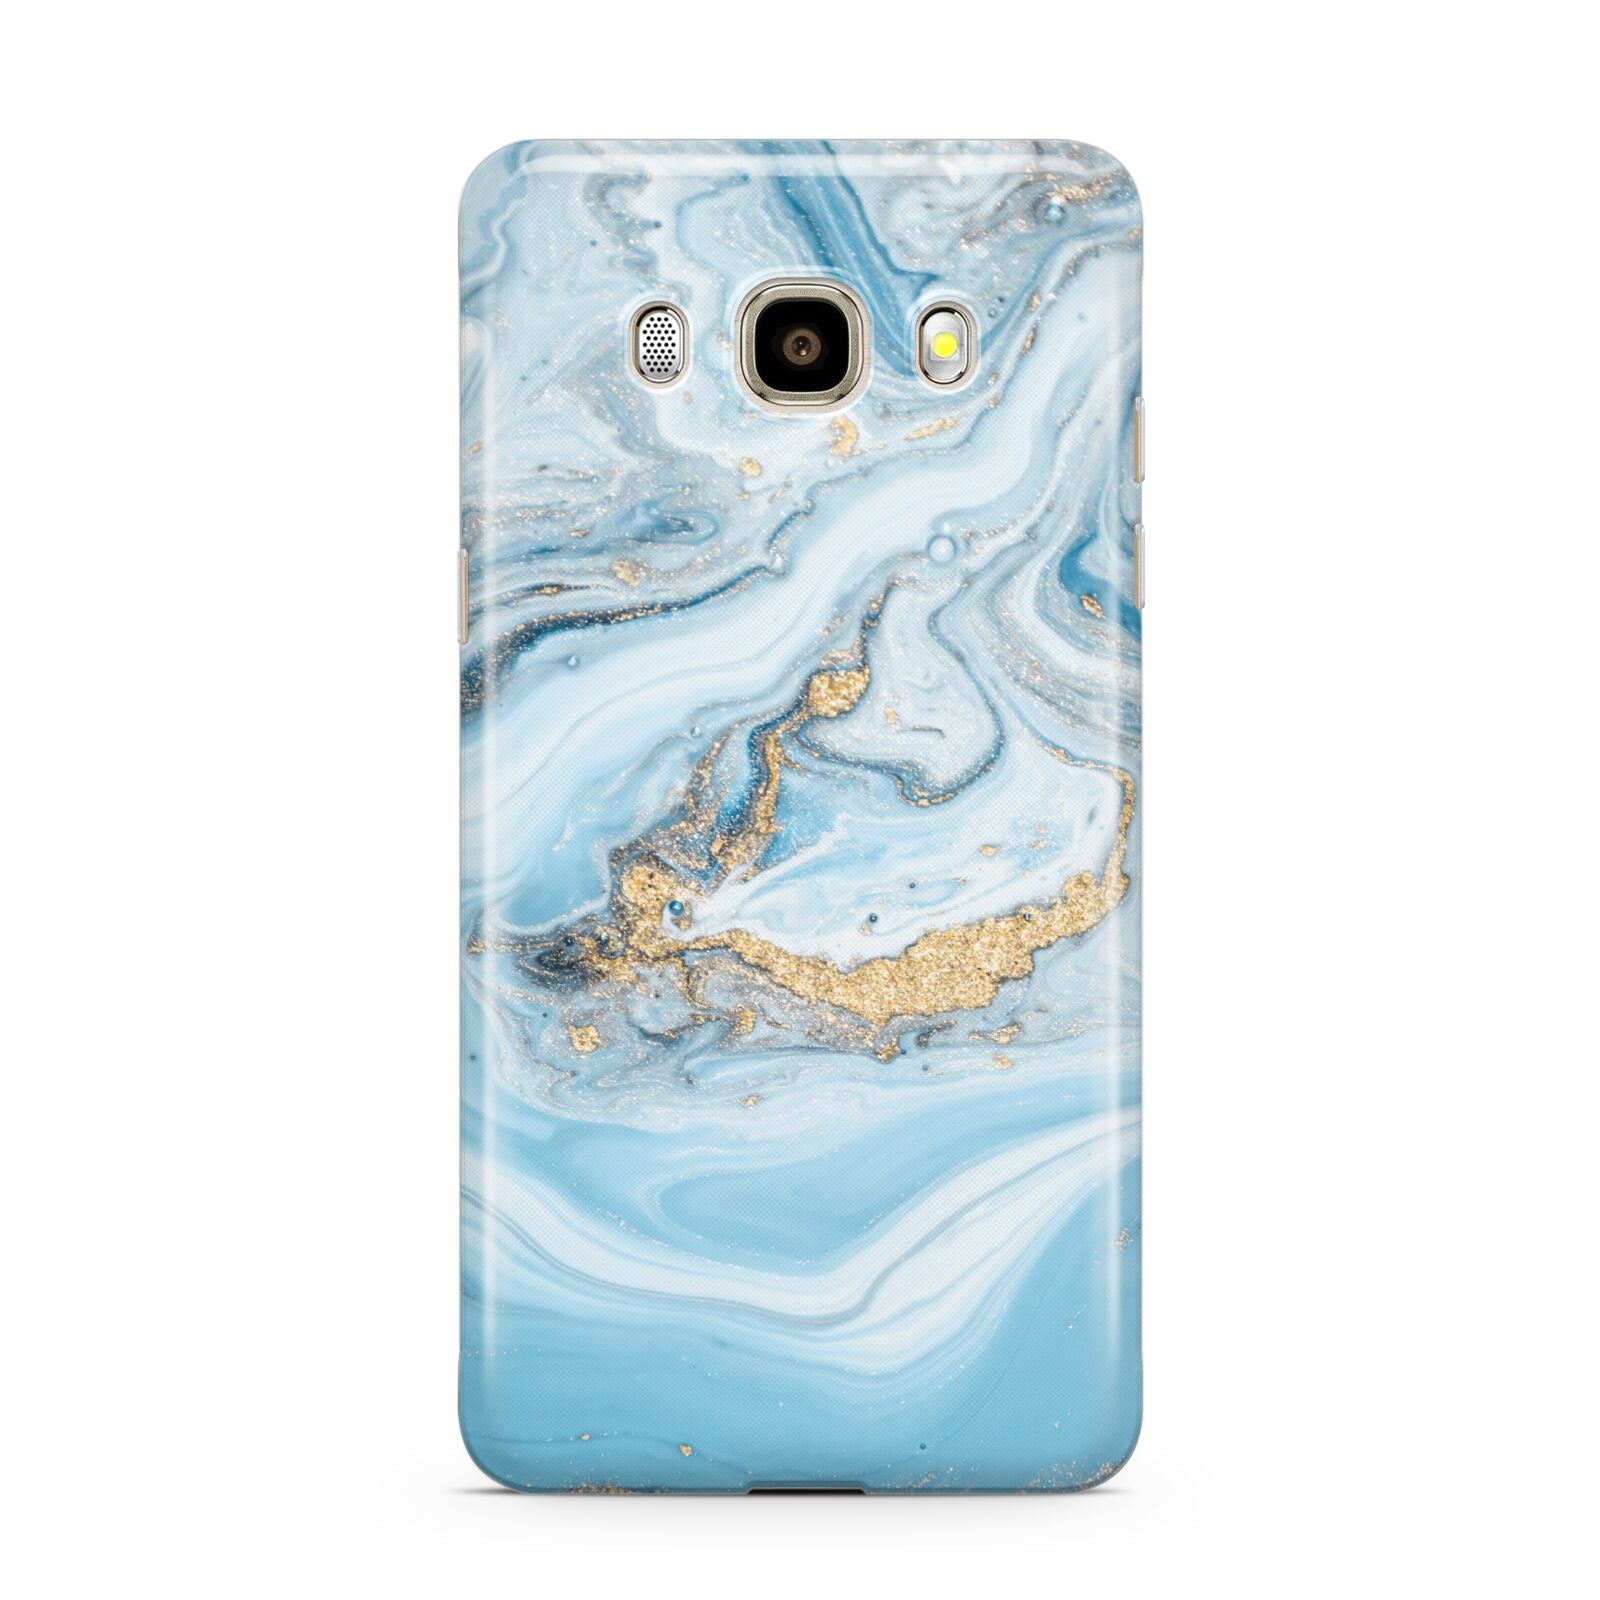 Marble Samsung Galaxy J7 2016 Case on gold phone